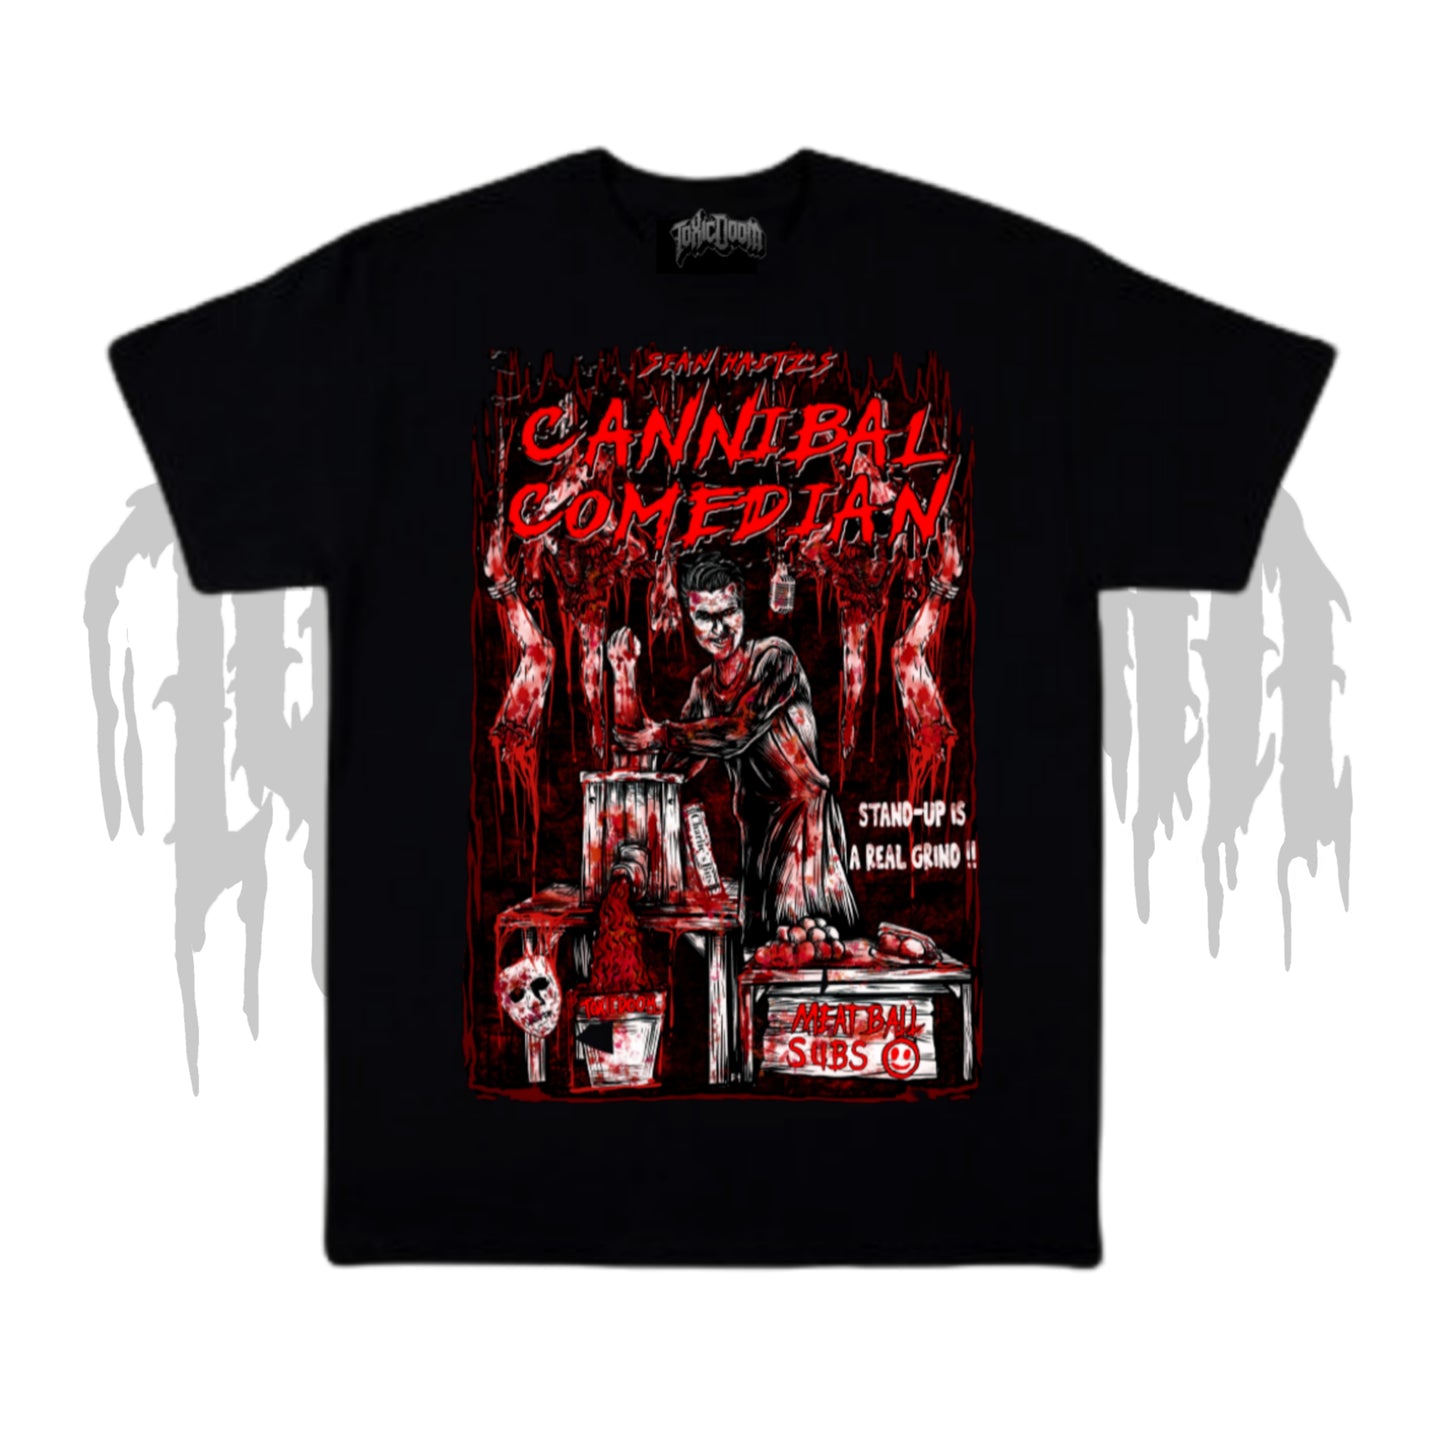 (Exclusive) Sean Haitz's Cannibal Comedian Unisex Shirt